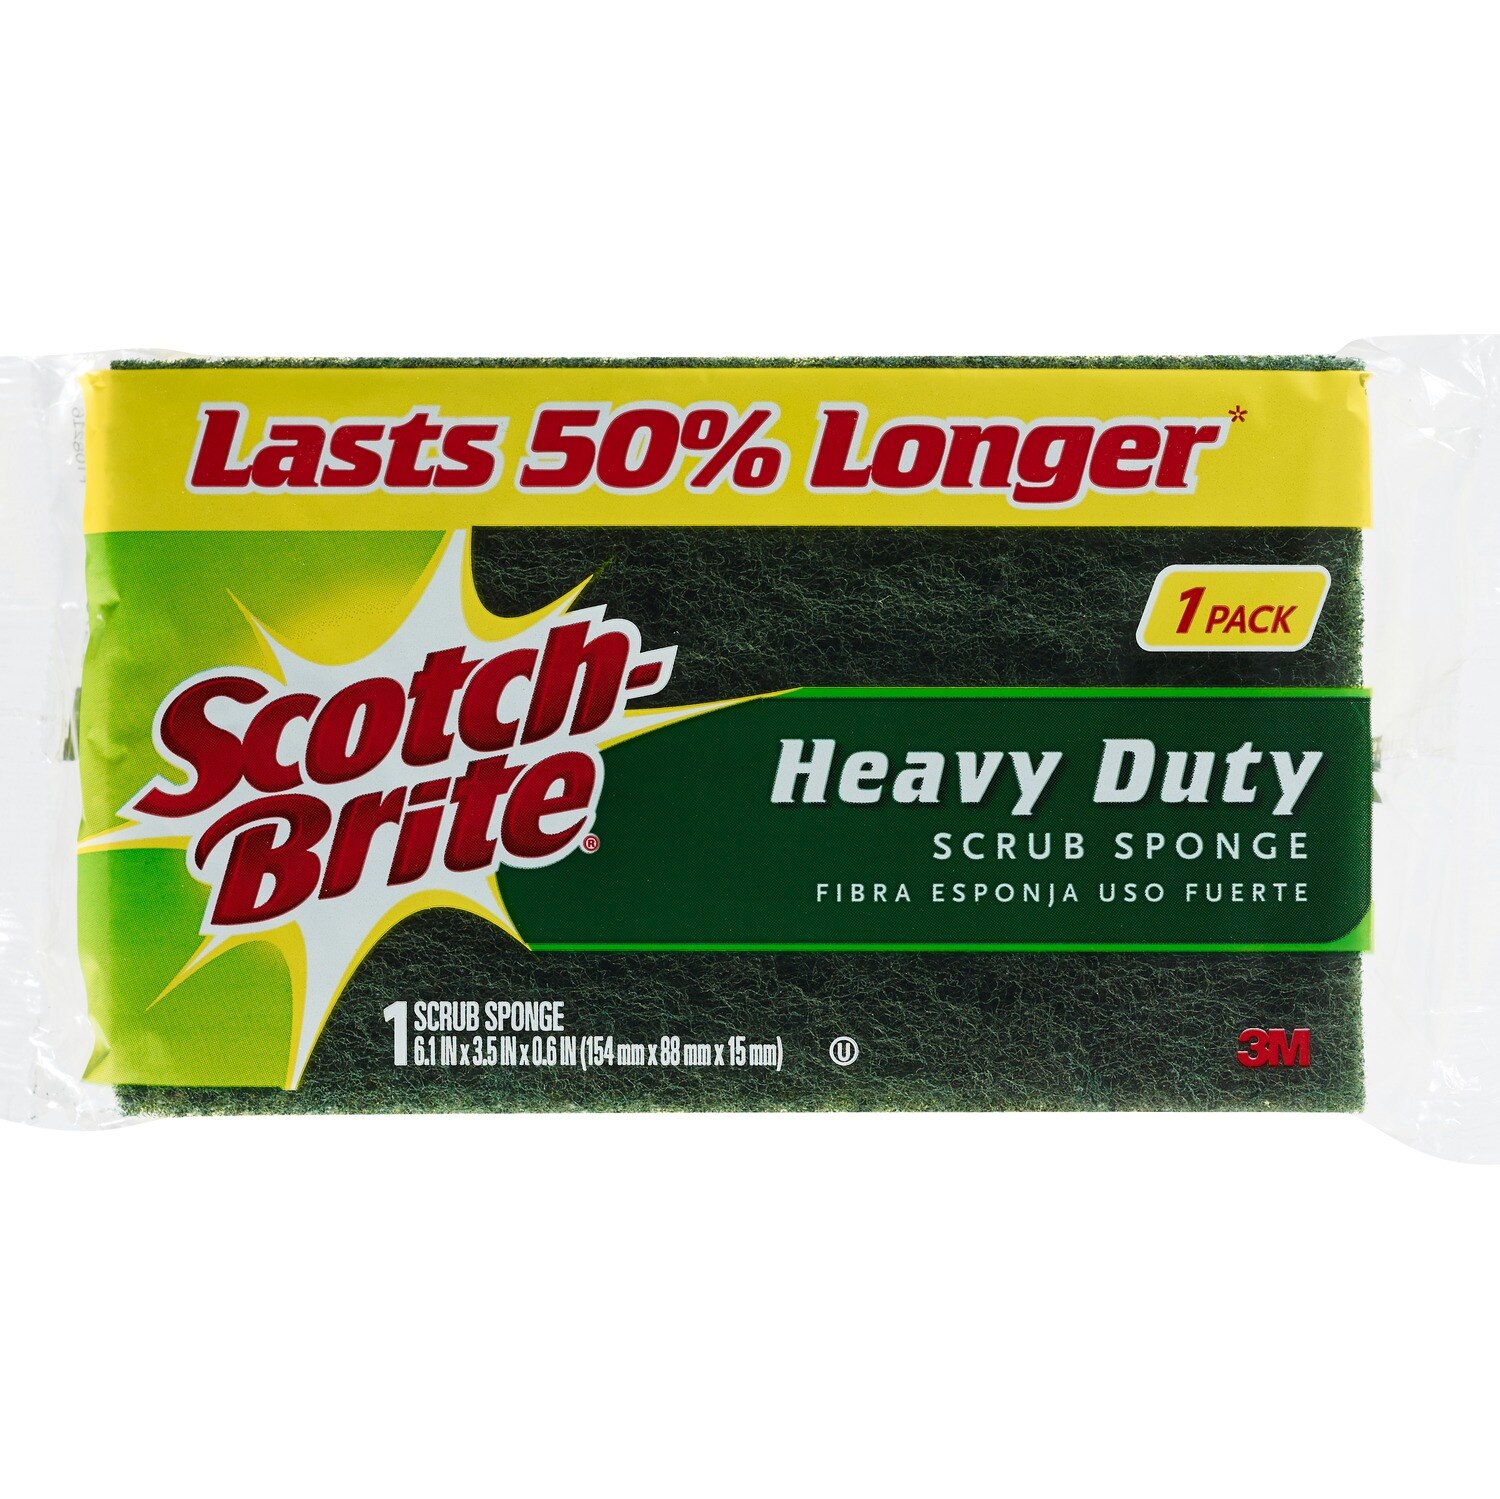 Scotch-Brite Heavy Duty Scrub Sponge, Large